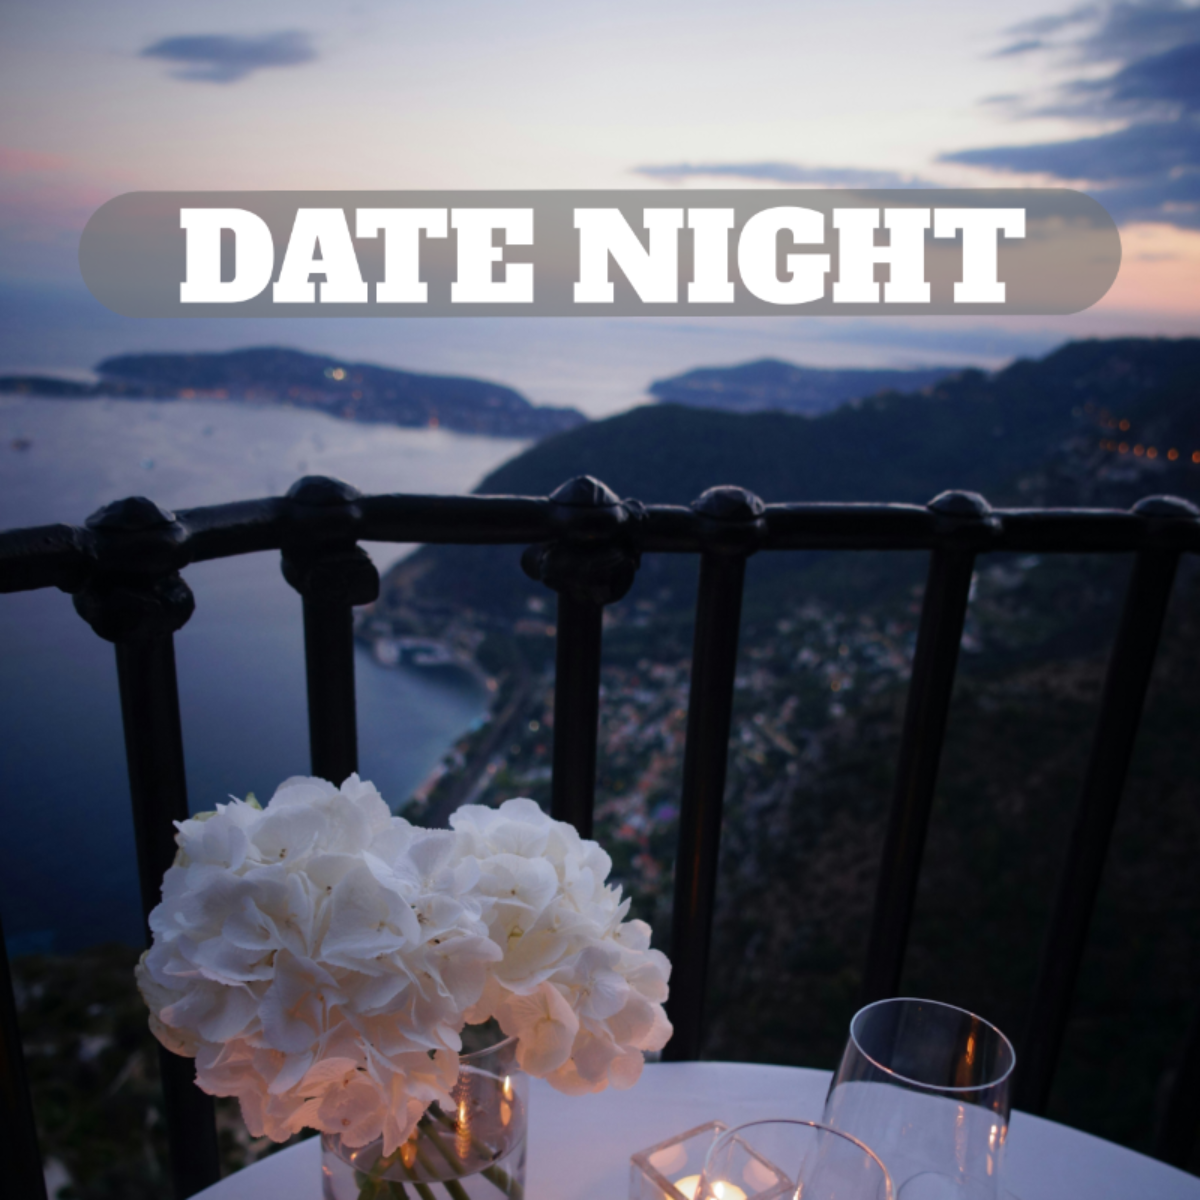 Date Night Itinerary Template